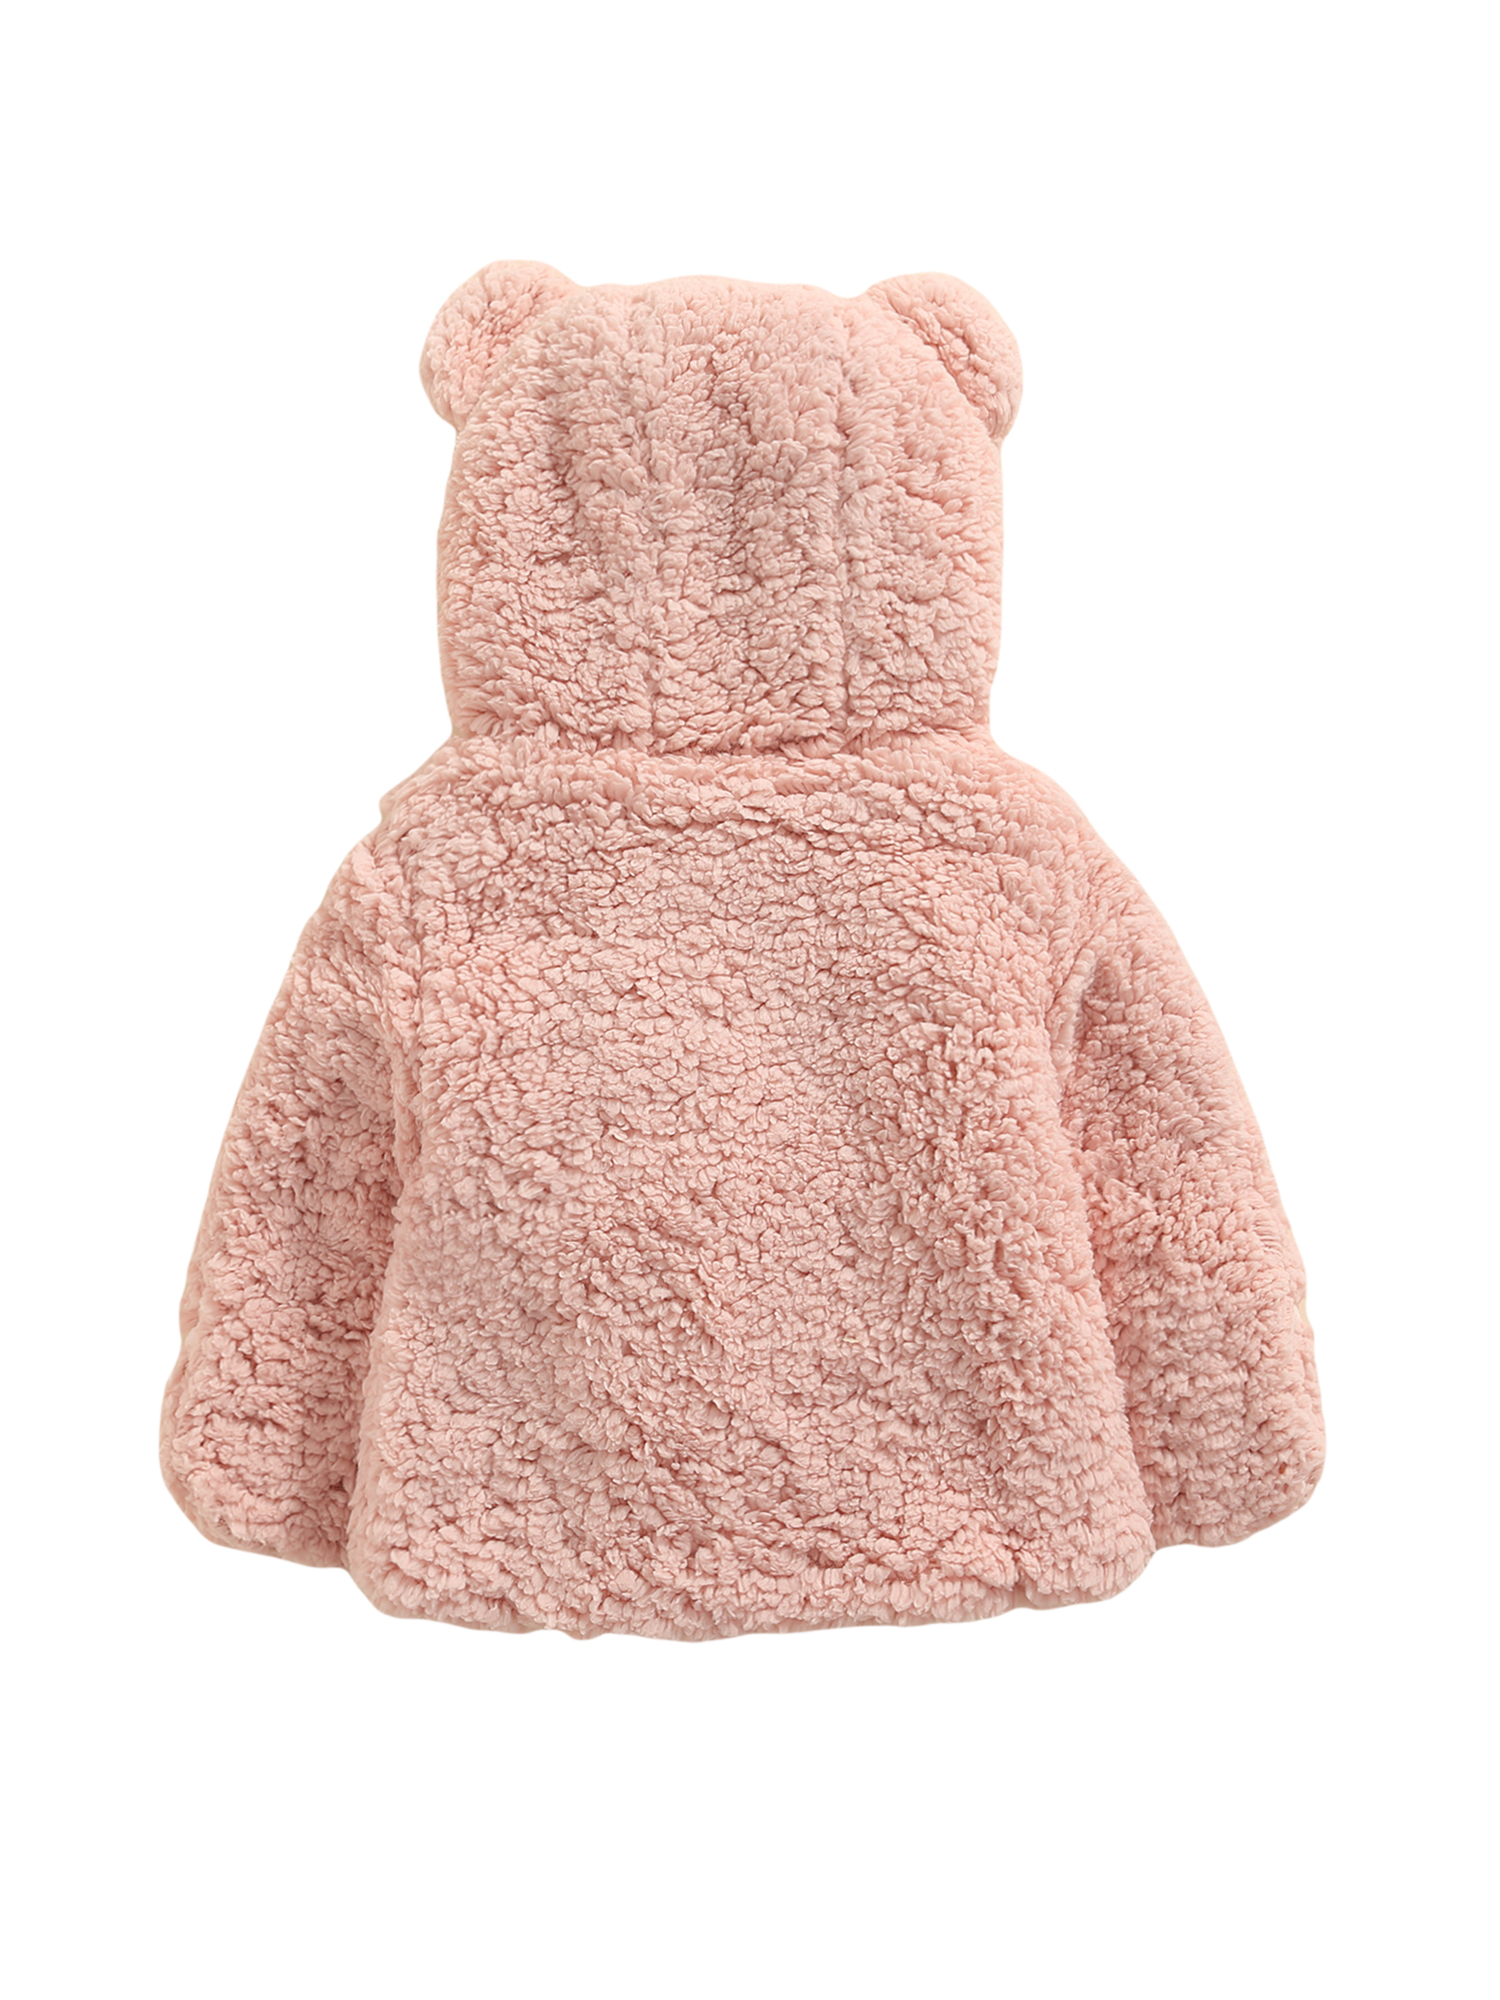 aturustex Baby Boys Girls Fleece Jacket Bear Ear Hoodie Warm Winter Outwear Top - image 3 of 7